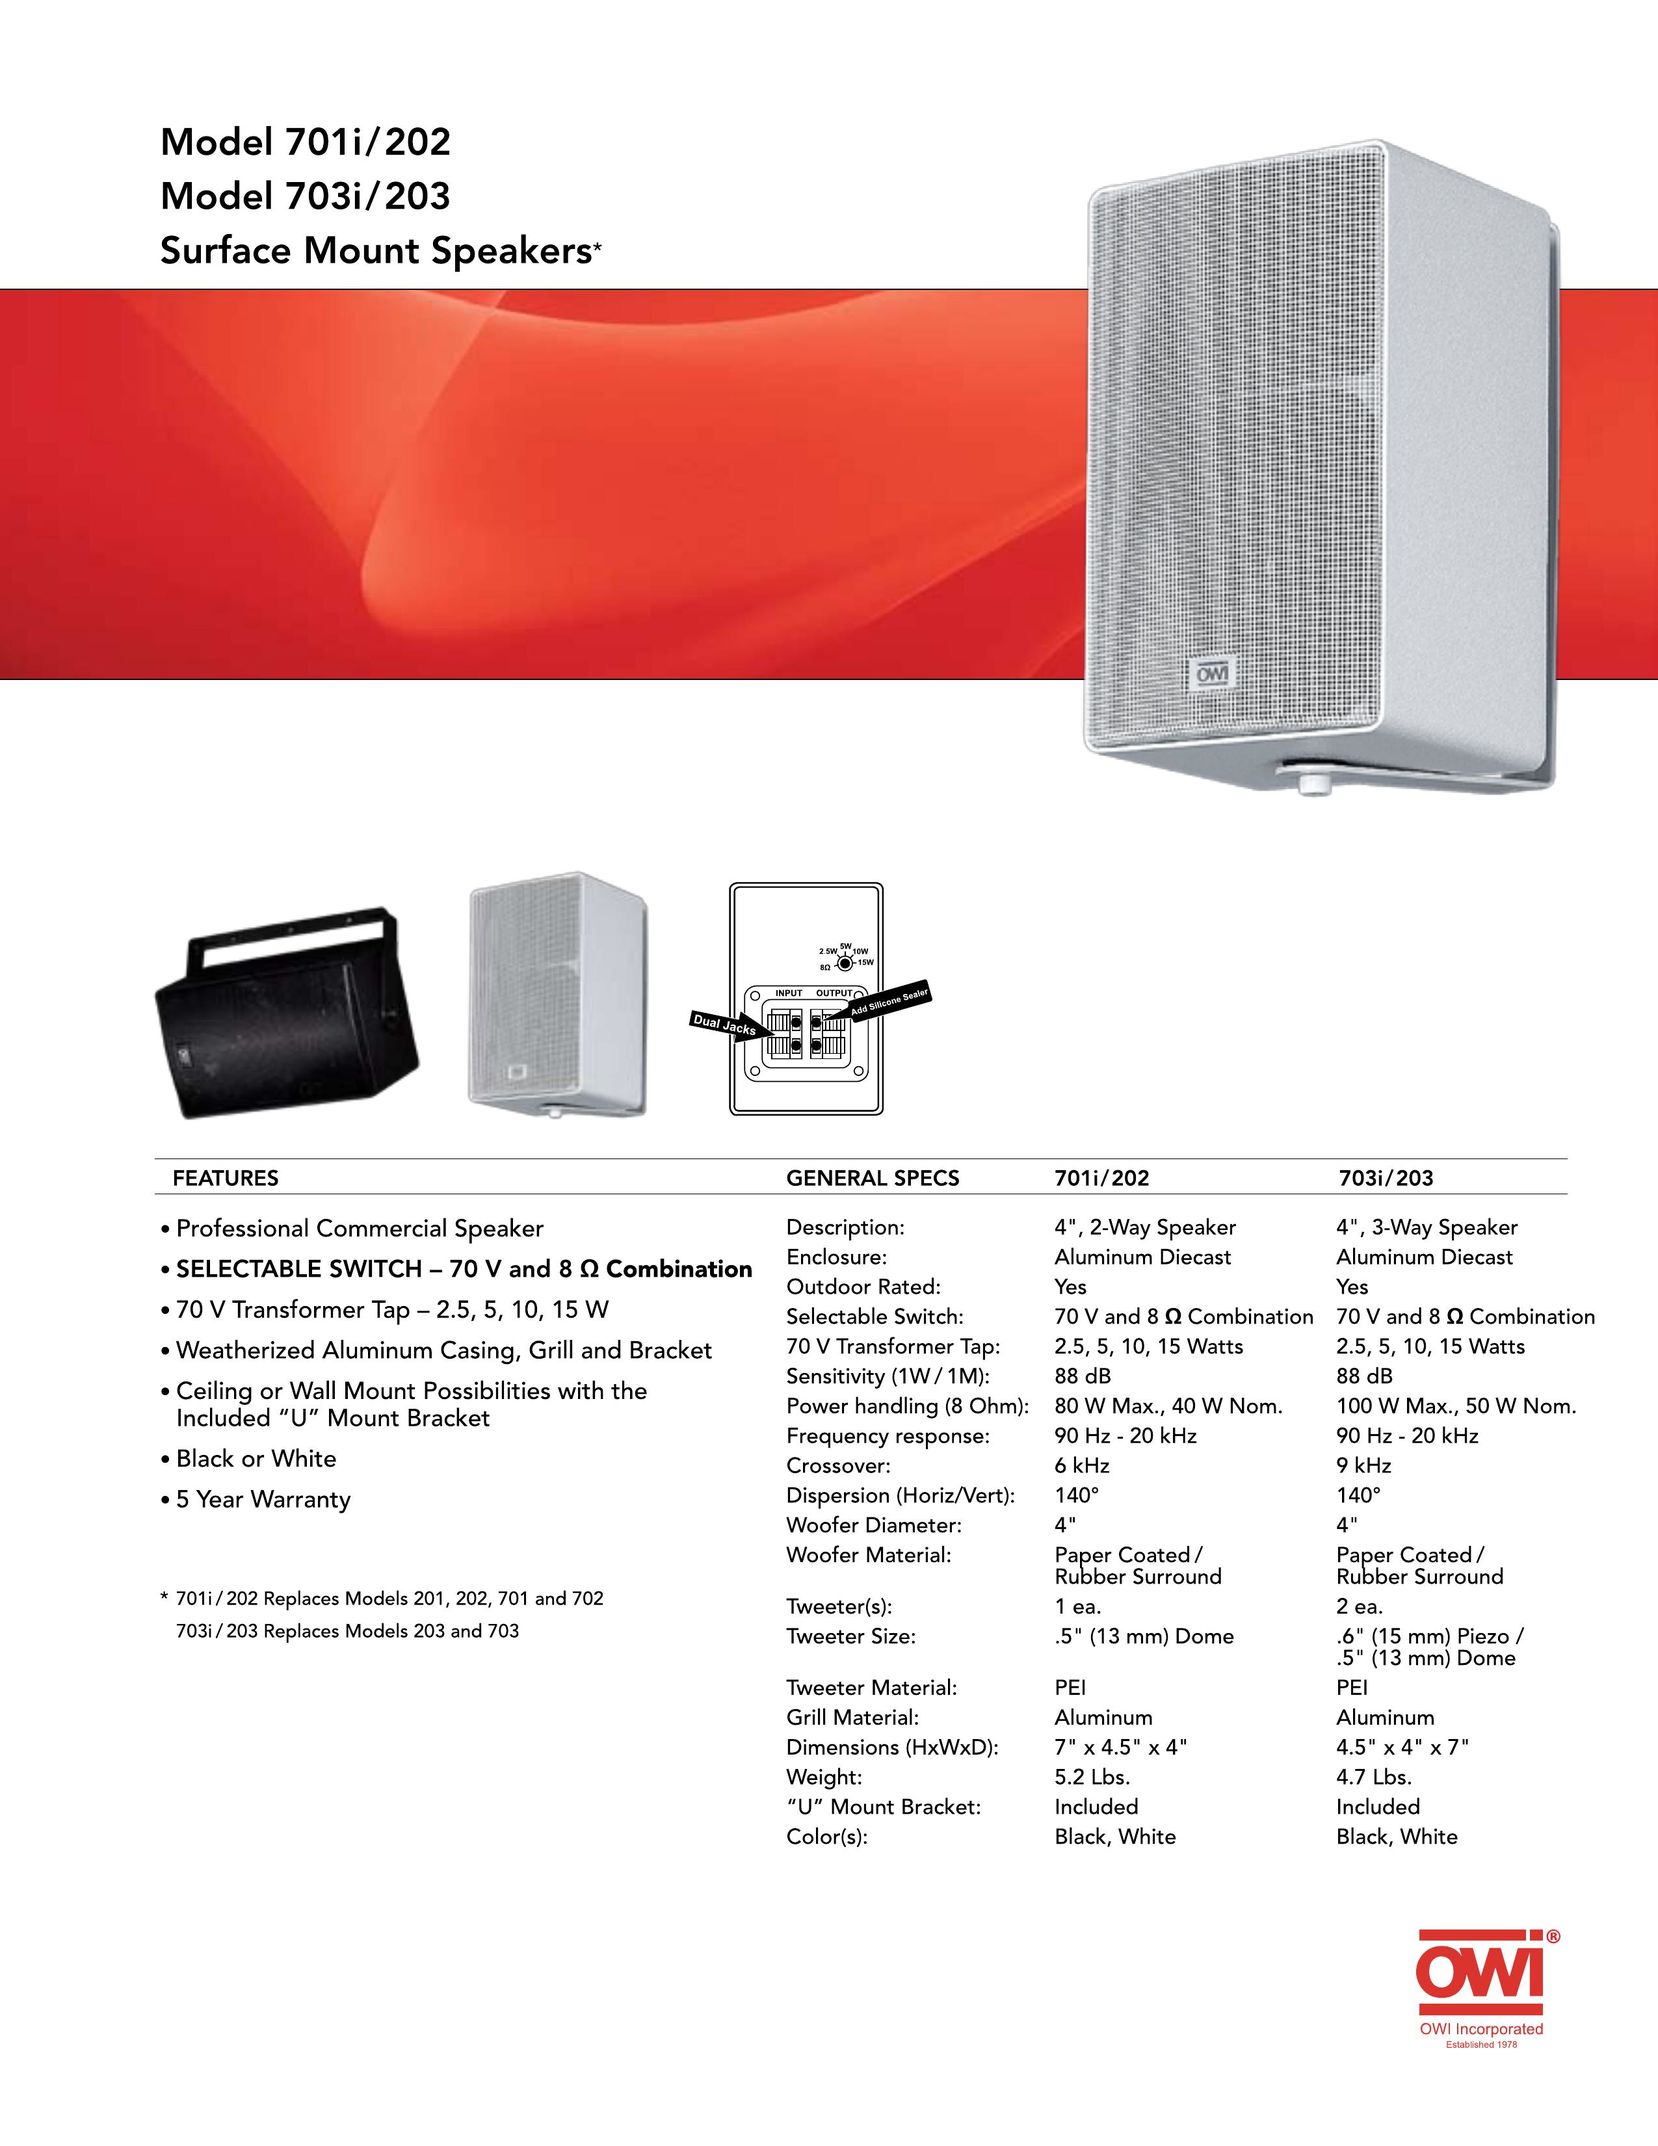 OWI 703i/203 Portable Speaker User Manual